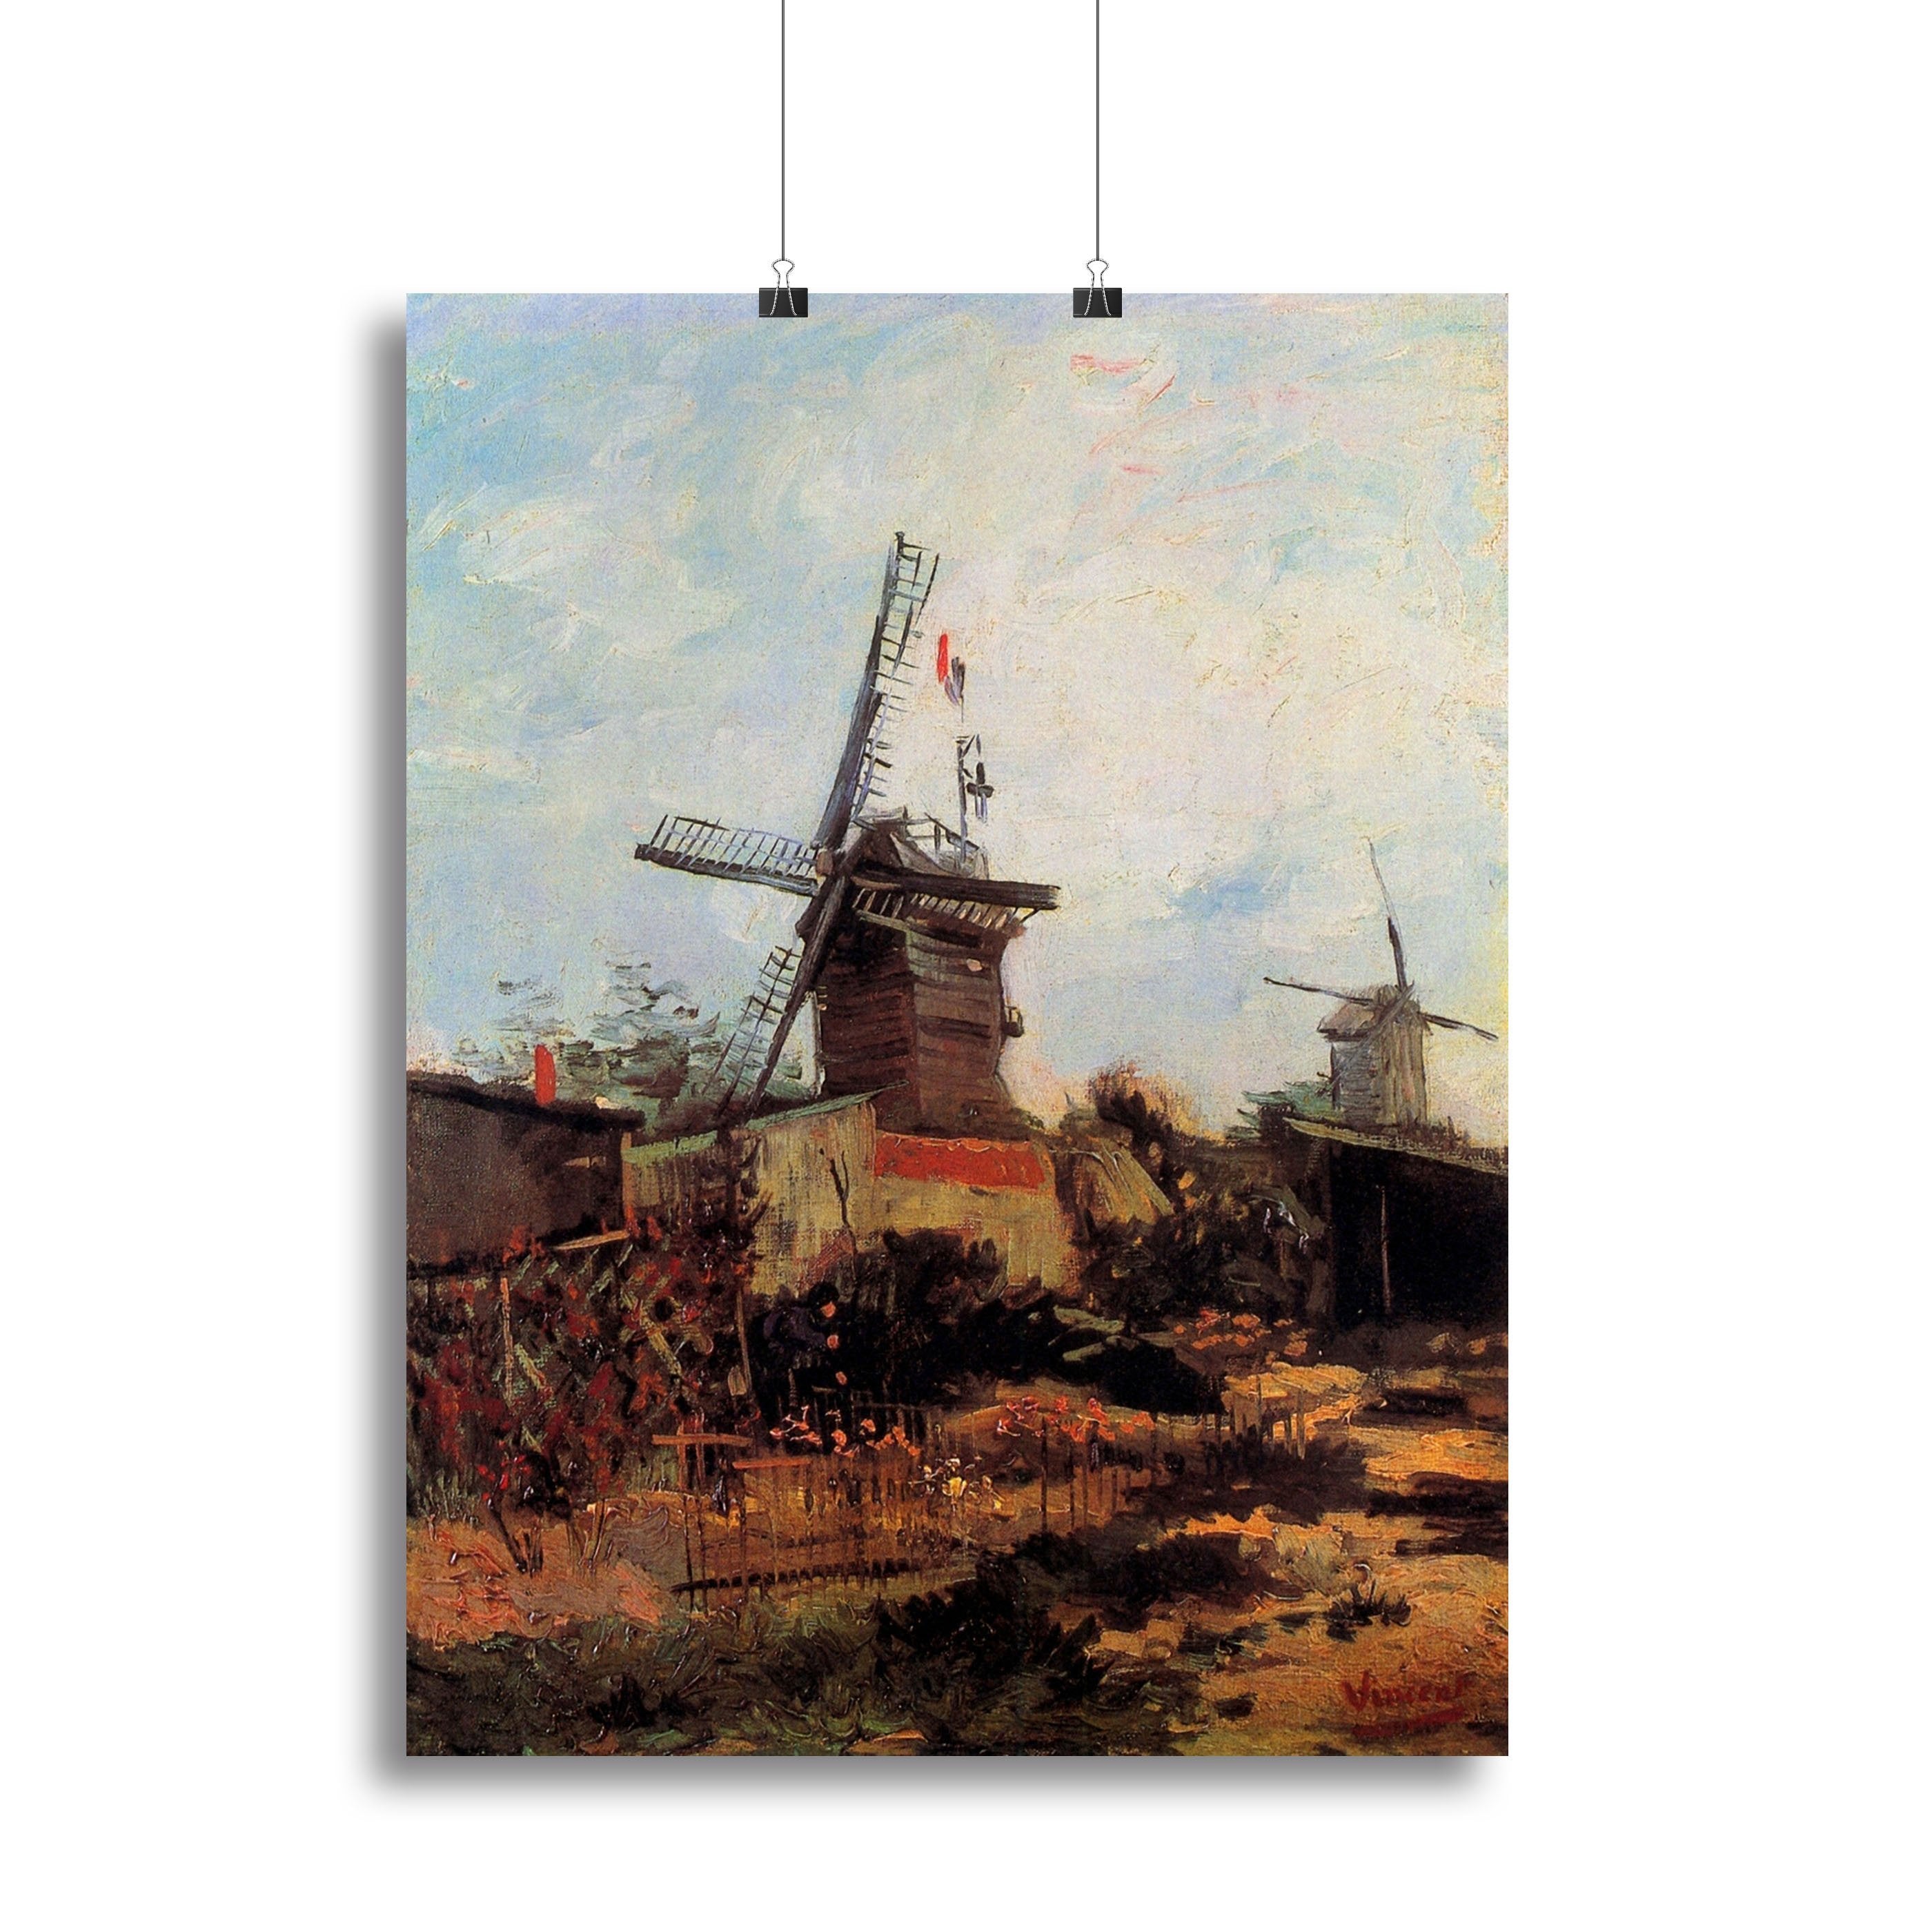 Le Moulin de Blute-Fin by Van Gogh Canvas Print or Poster